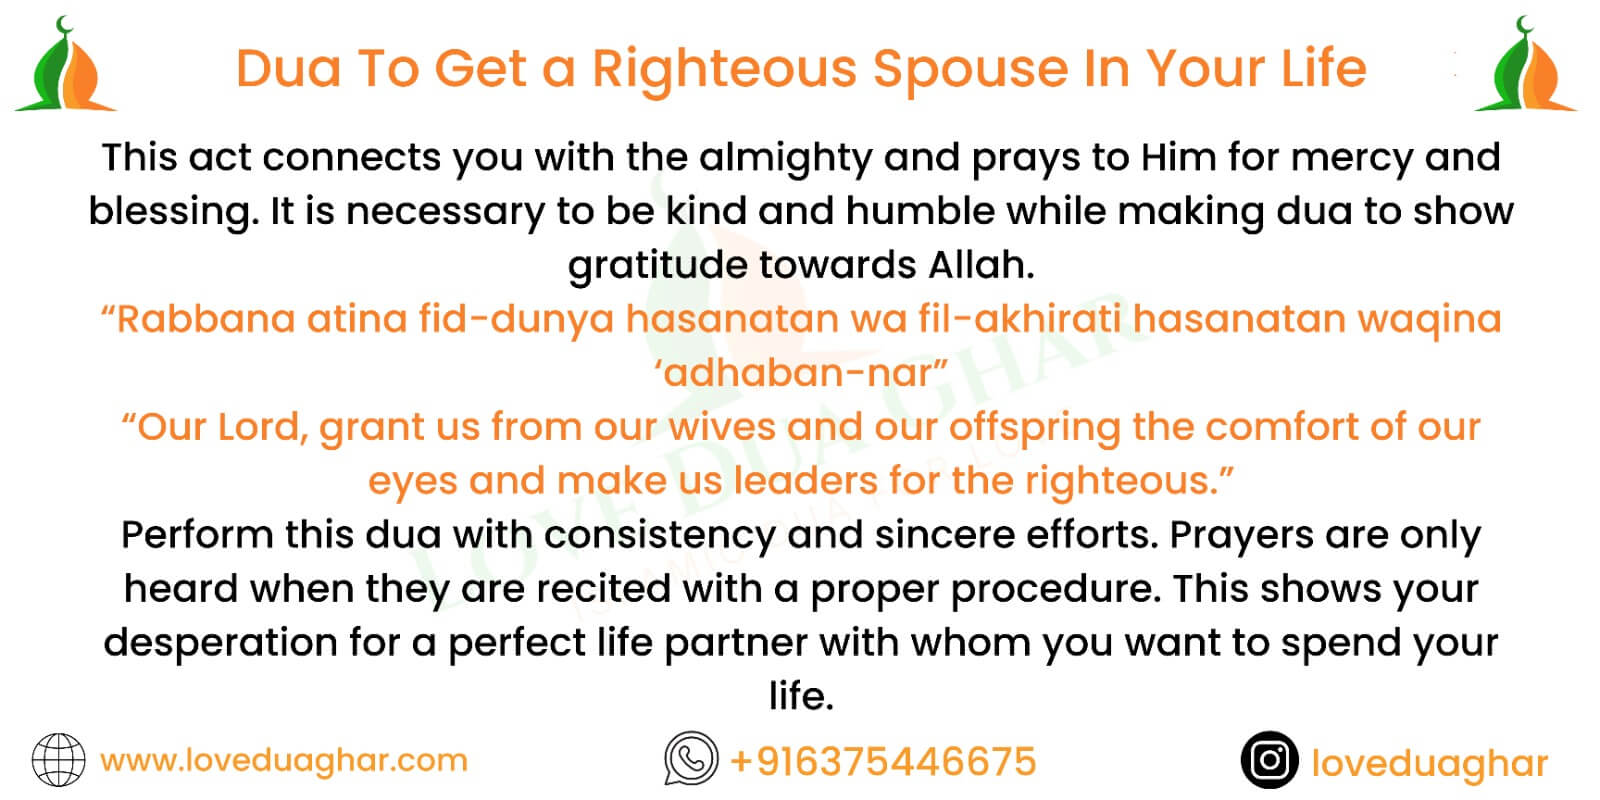 Dua For Rightouse Spouse